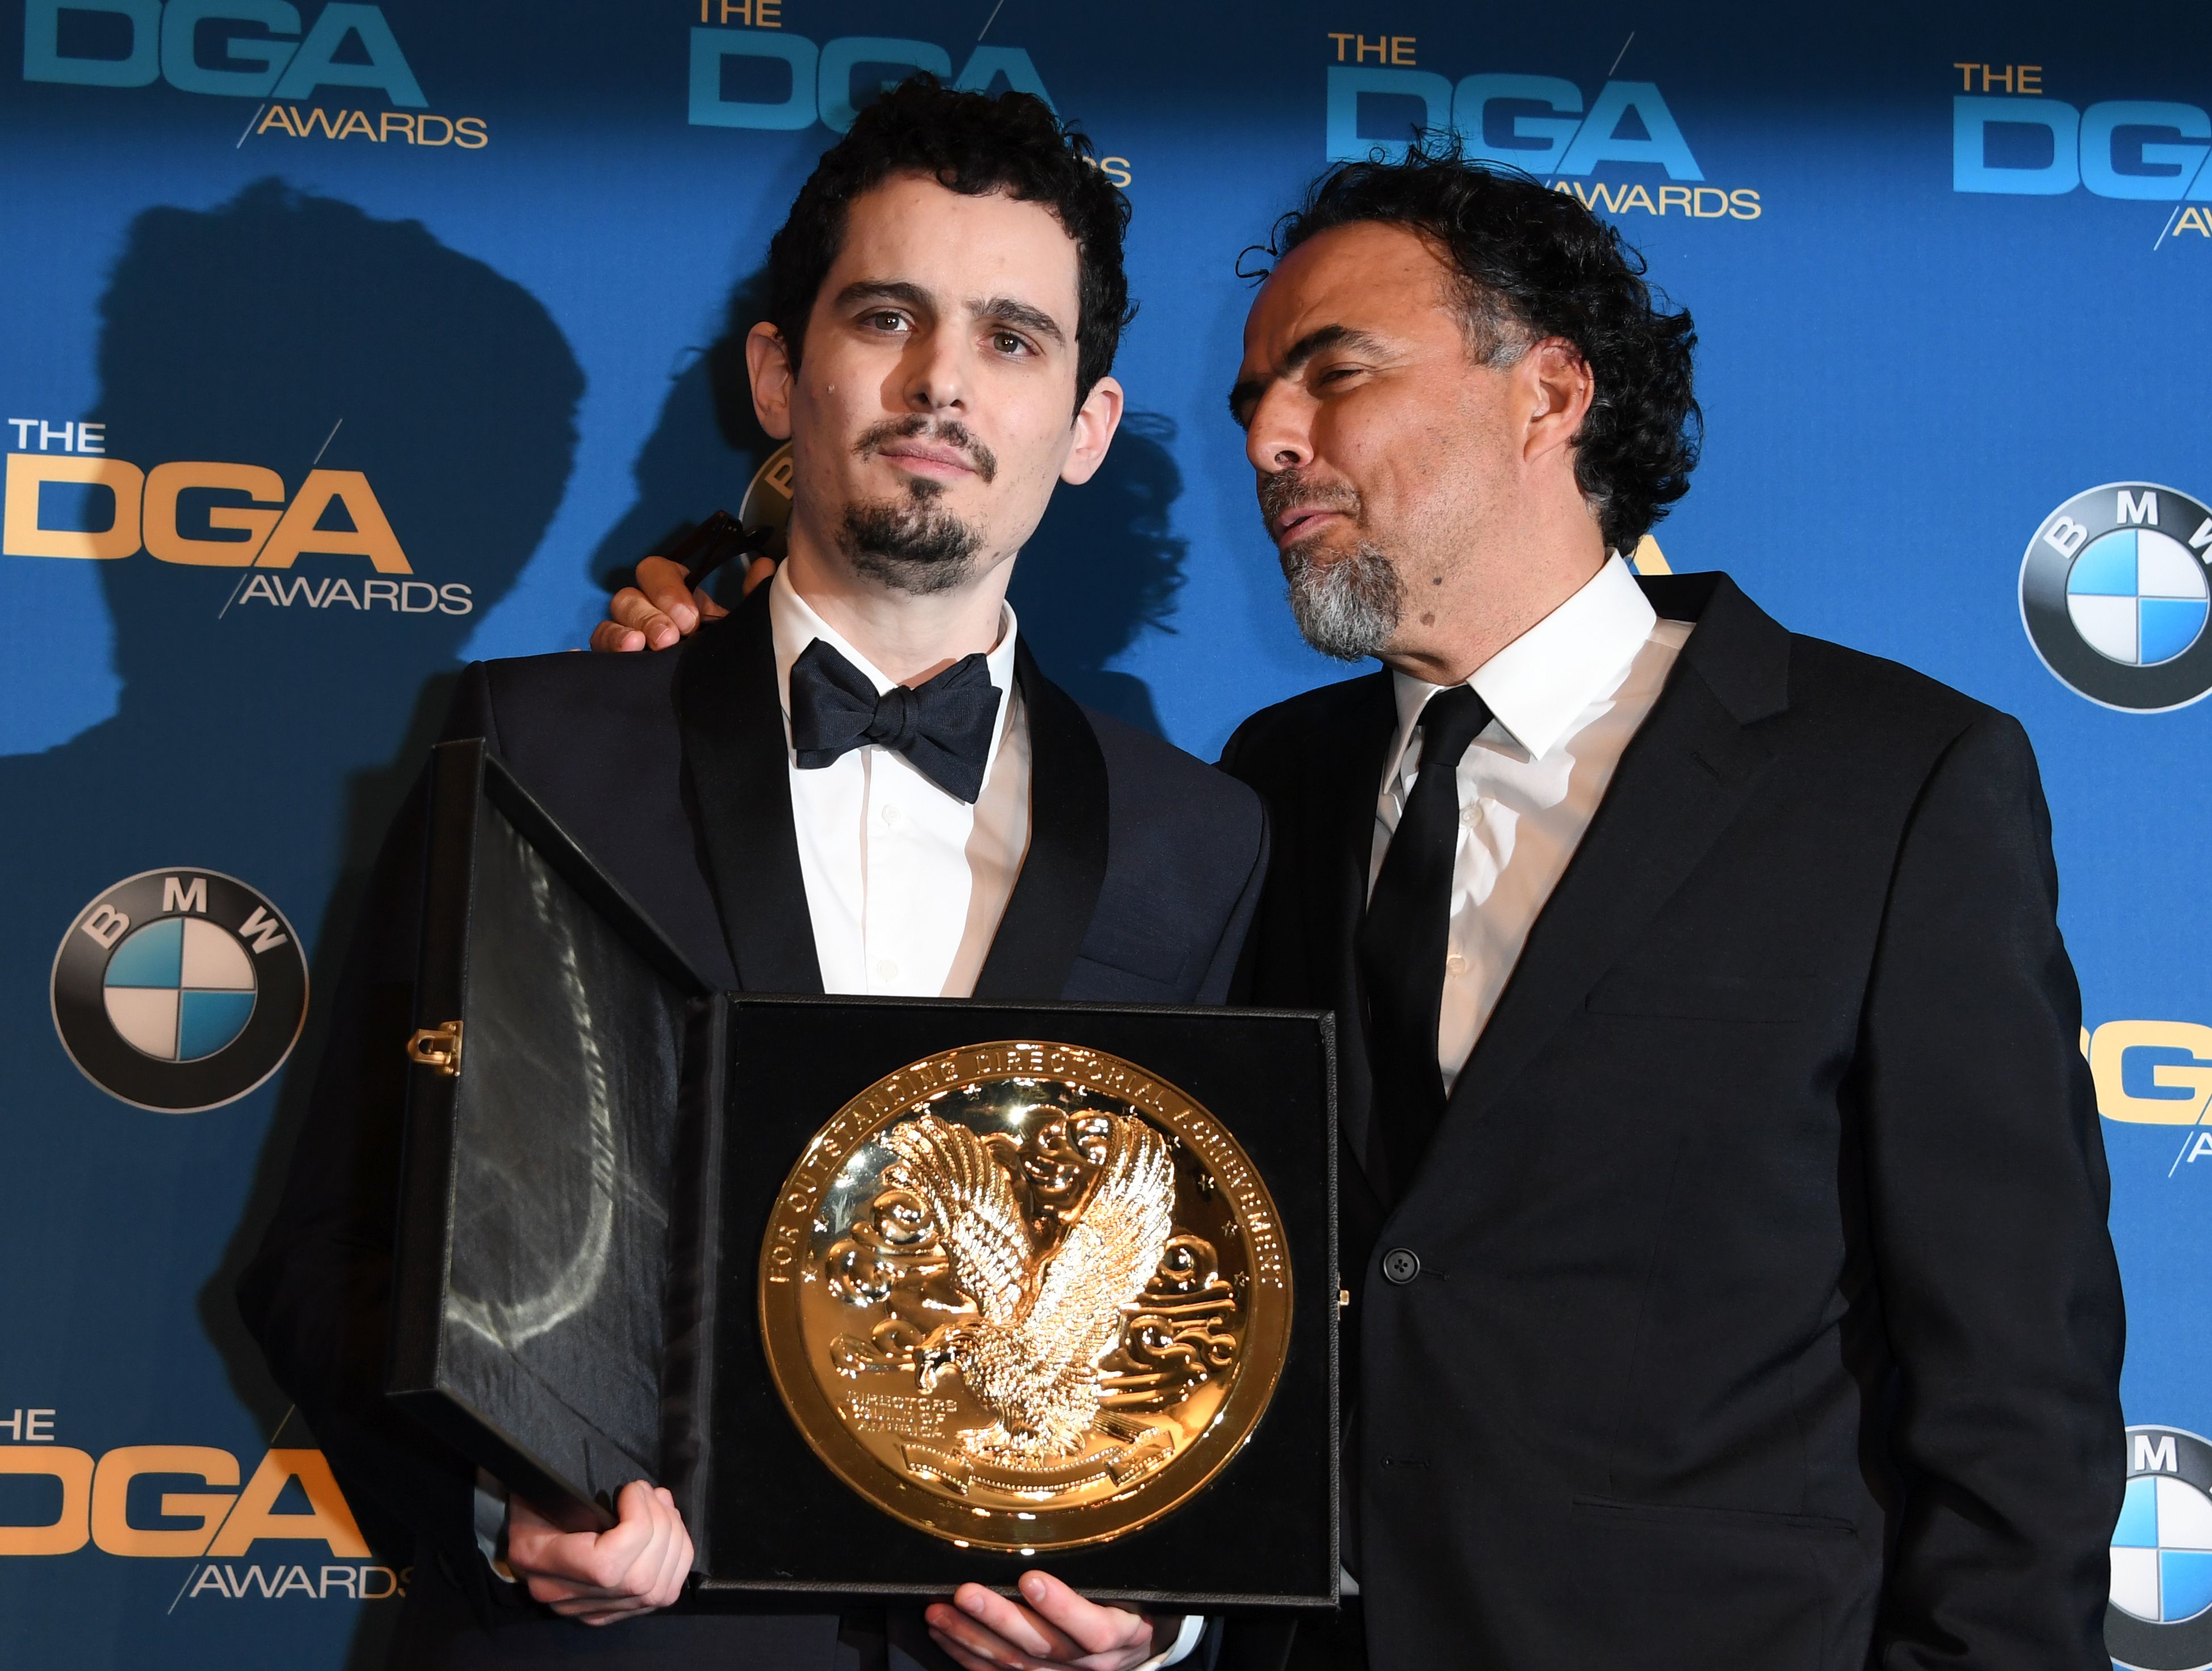 "La La Land" director Chazelle wins top DGA award, stoking Oscar hopes